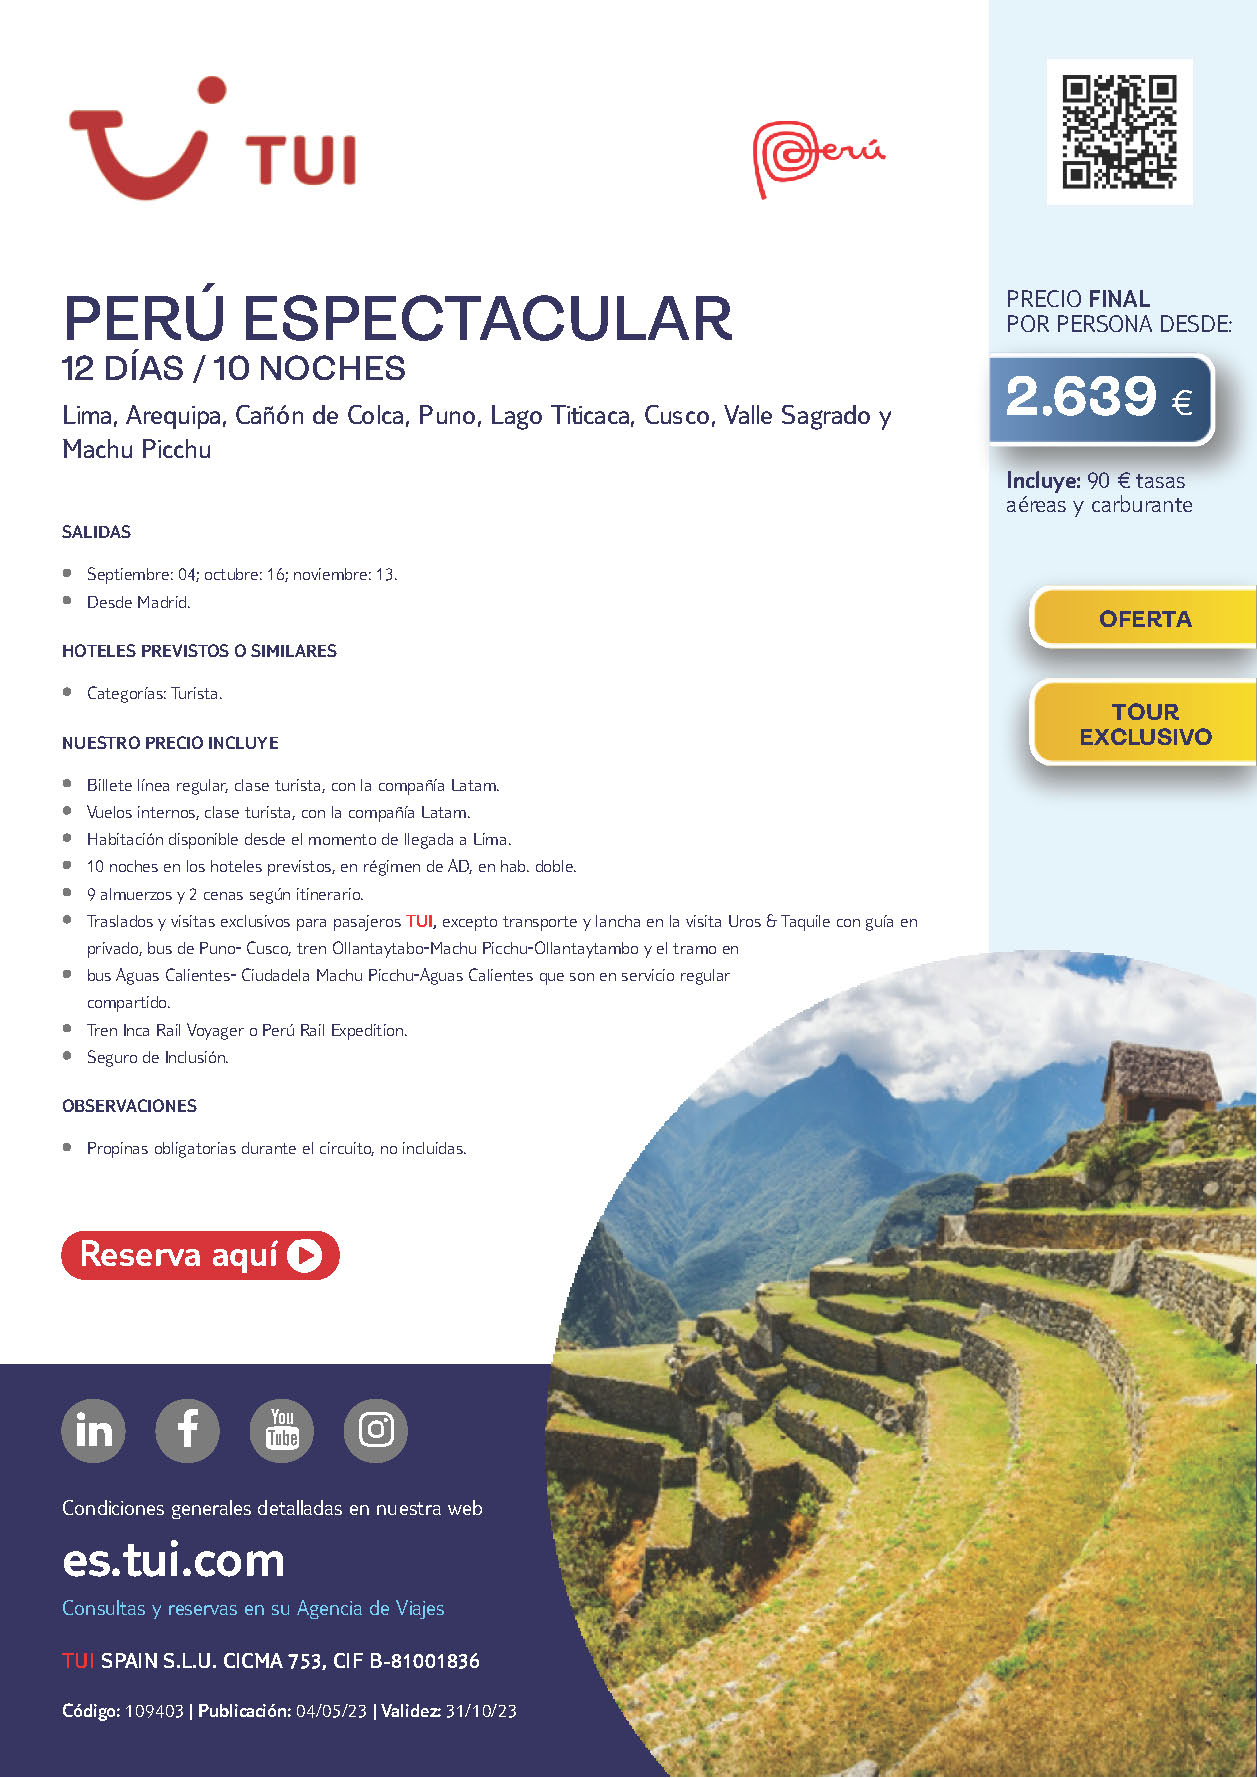 Oferta TUI circuito Peru Espectacular 12 dias salidas Septiembre Octubre Noviembre 2023 desde Madrid vuelos Latam